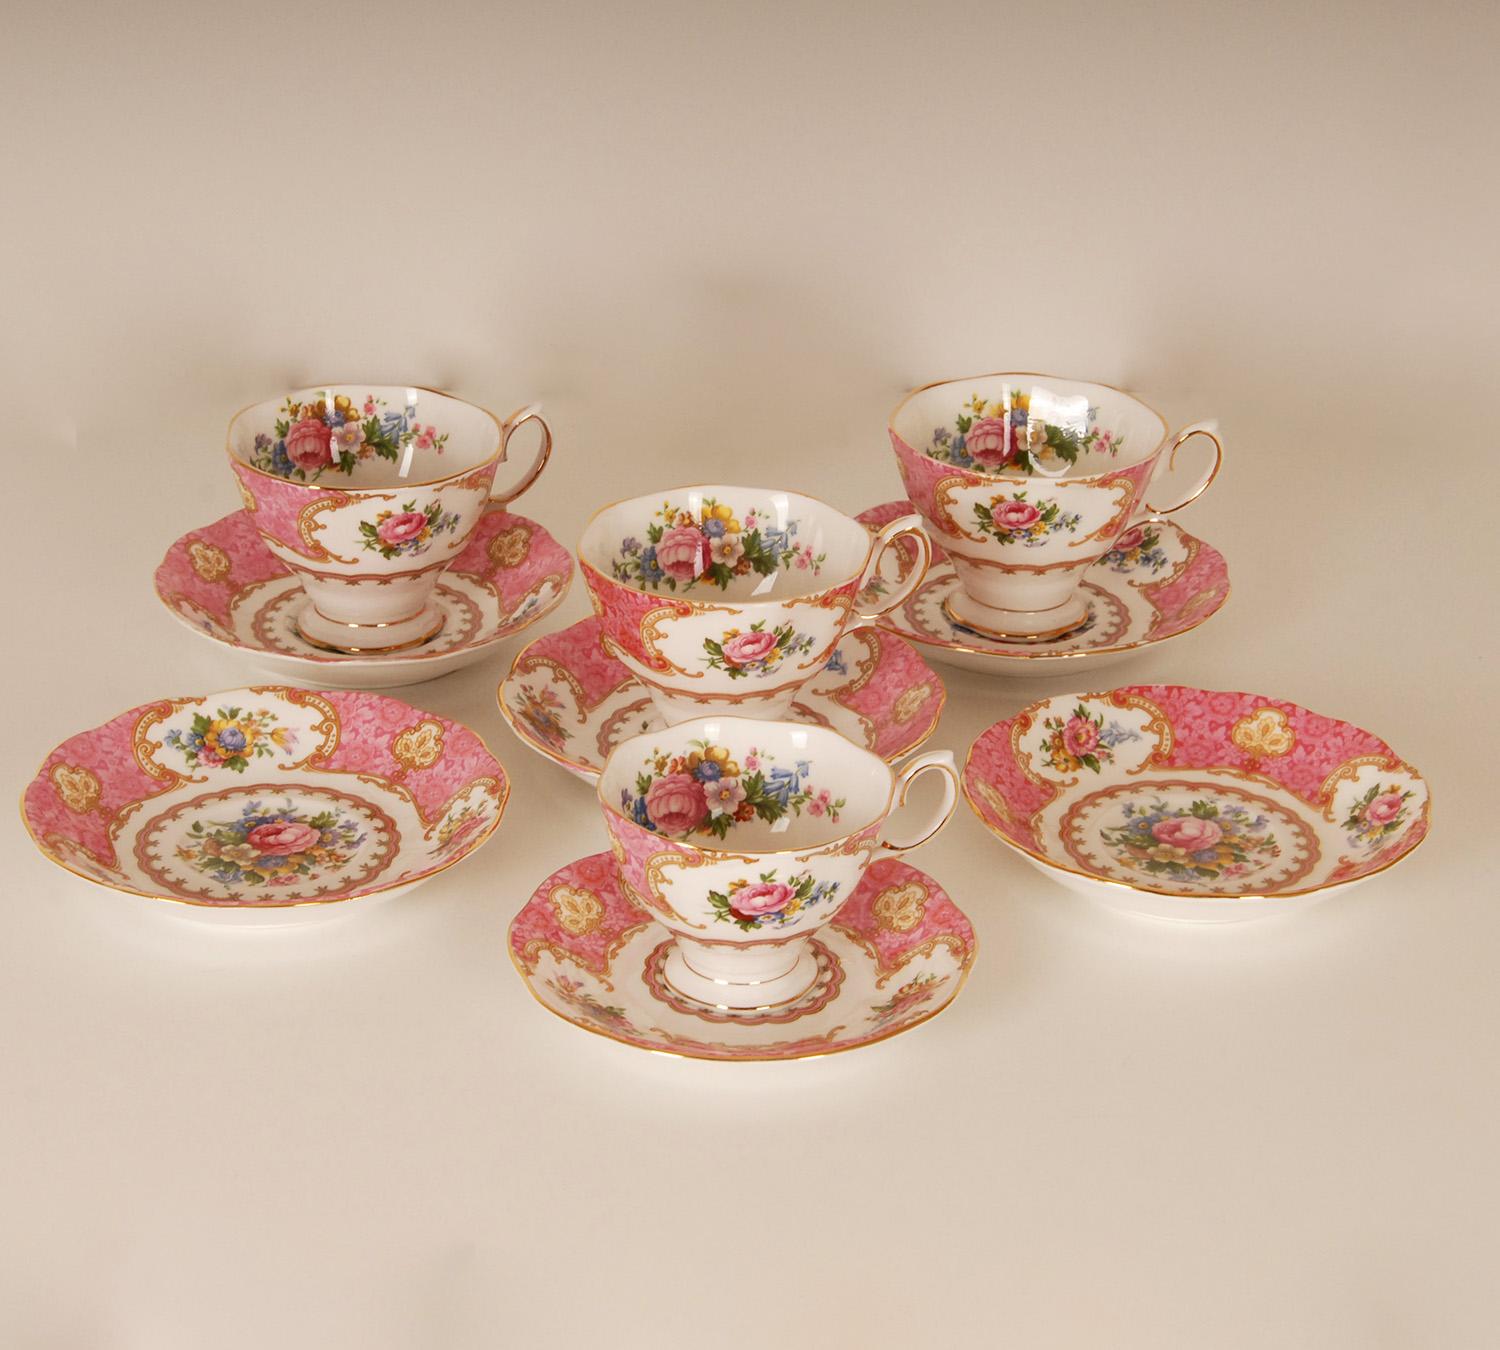 English Vintage Royal Albert Bone China Tea Set and Plates Lady Carlyle Pattern 14 Pcs